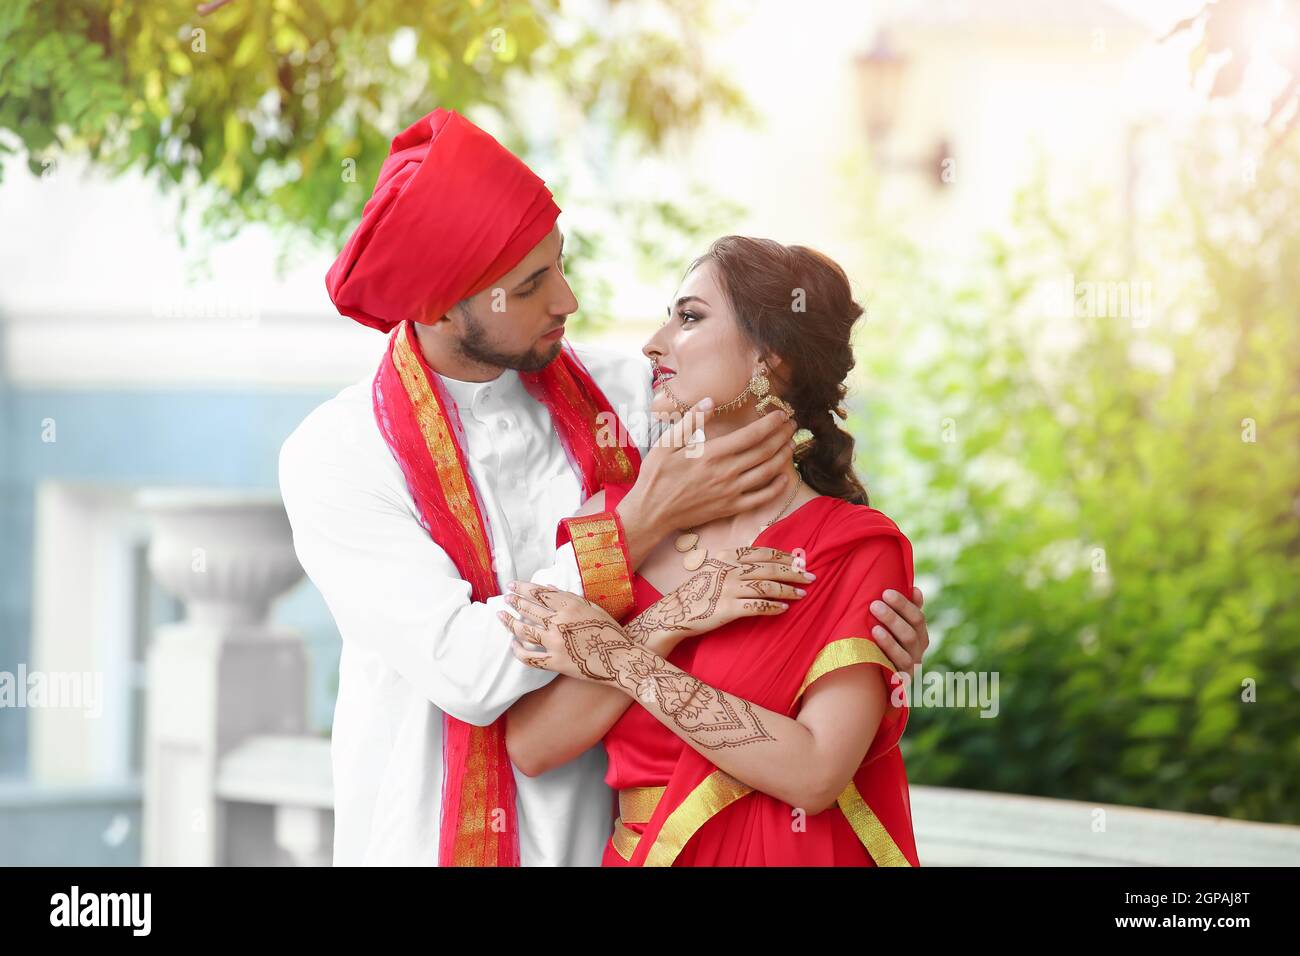 Maharashtrian Wedding: Everything you need to know about Marathi Rituals